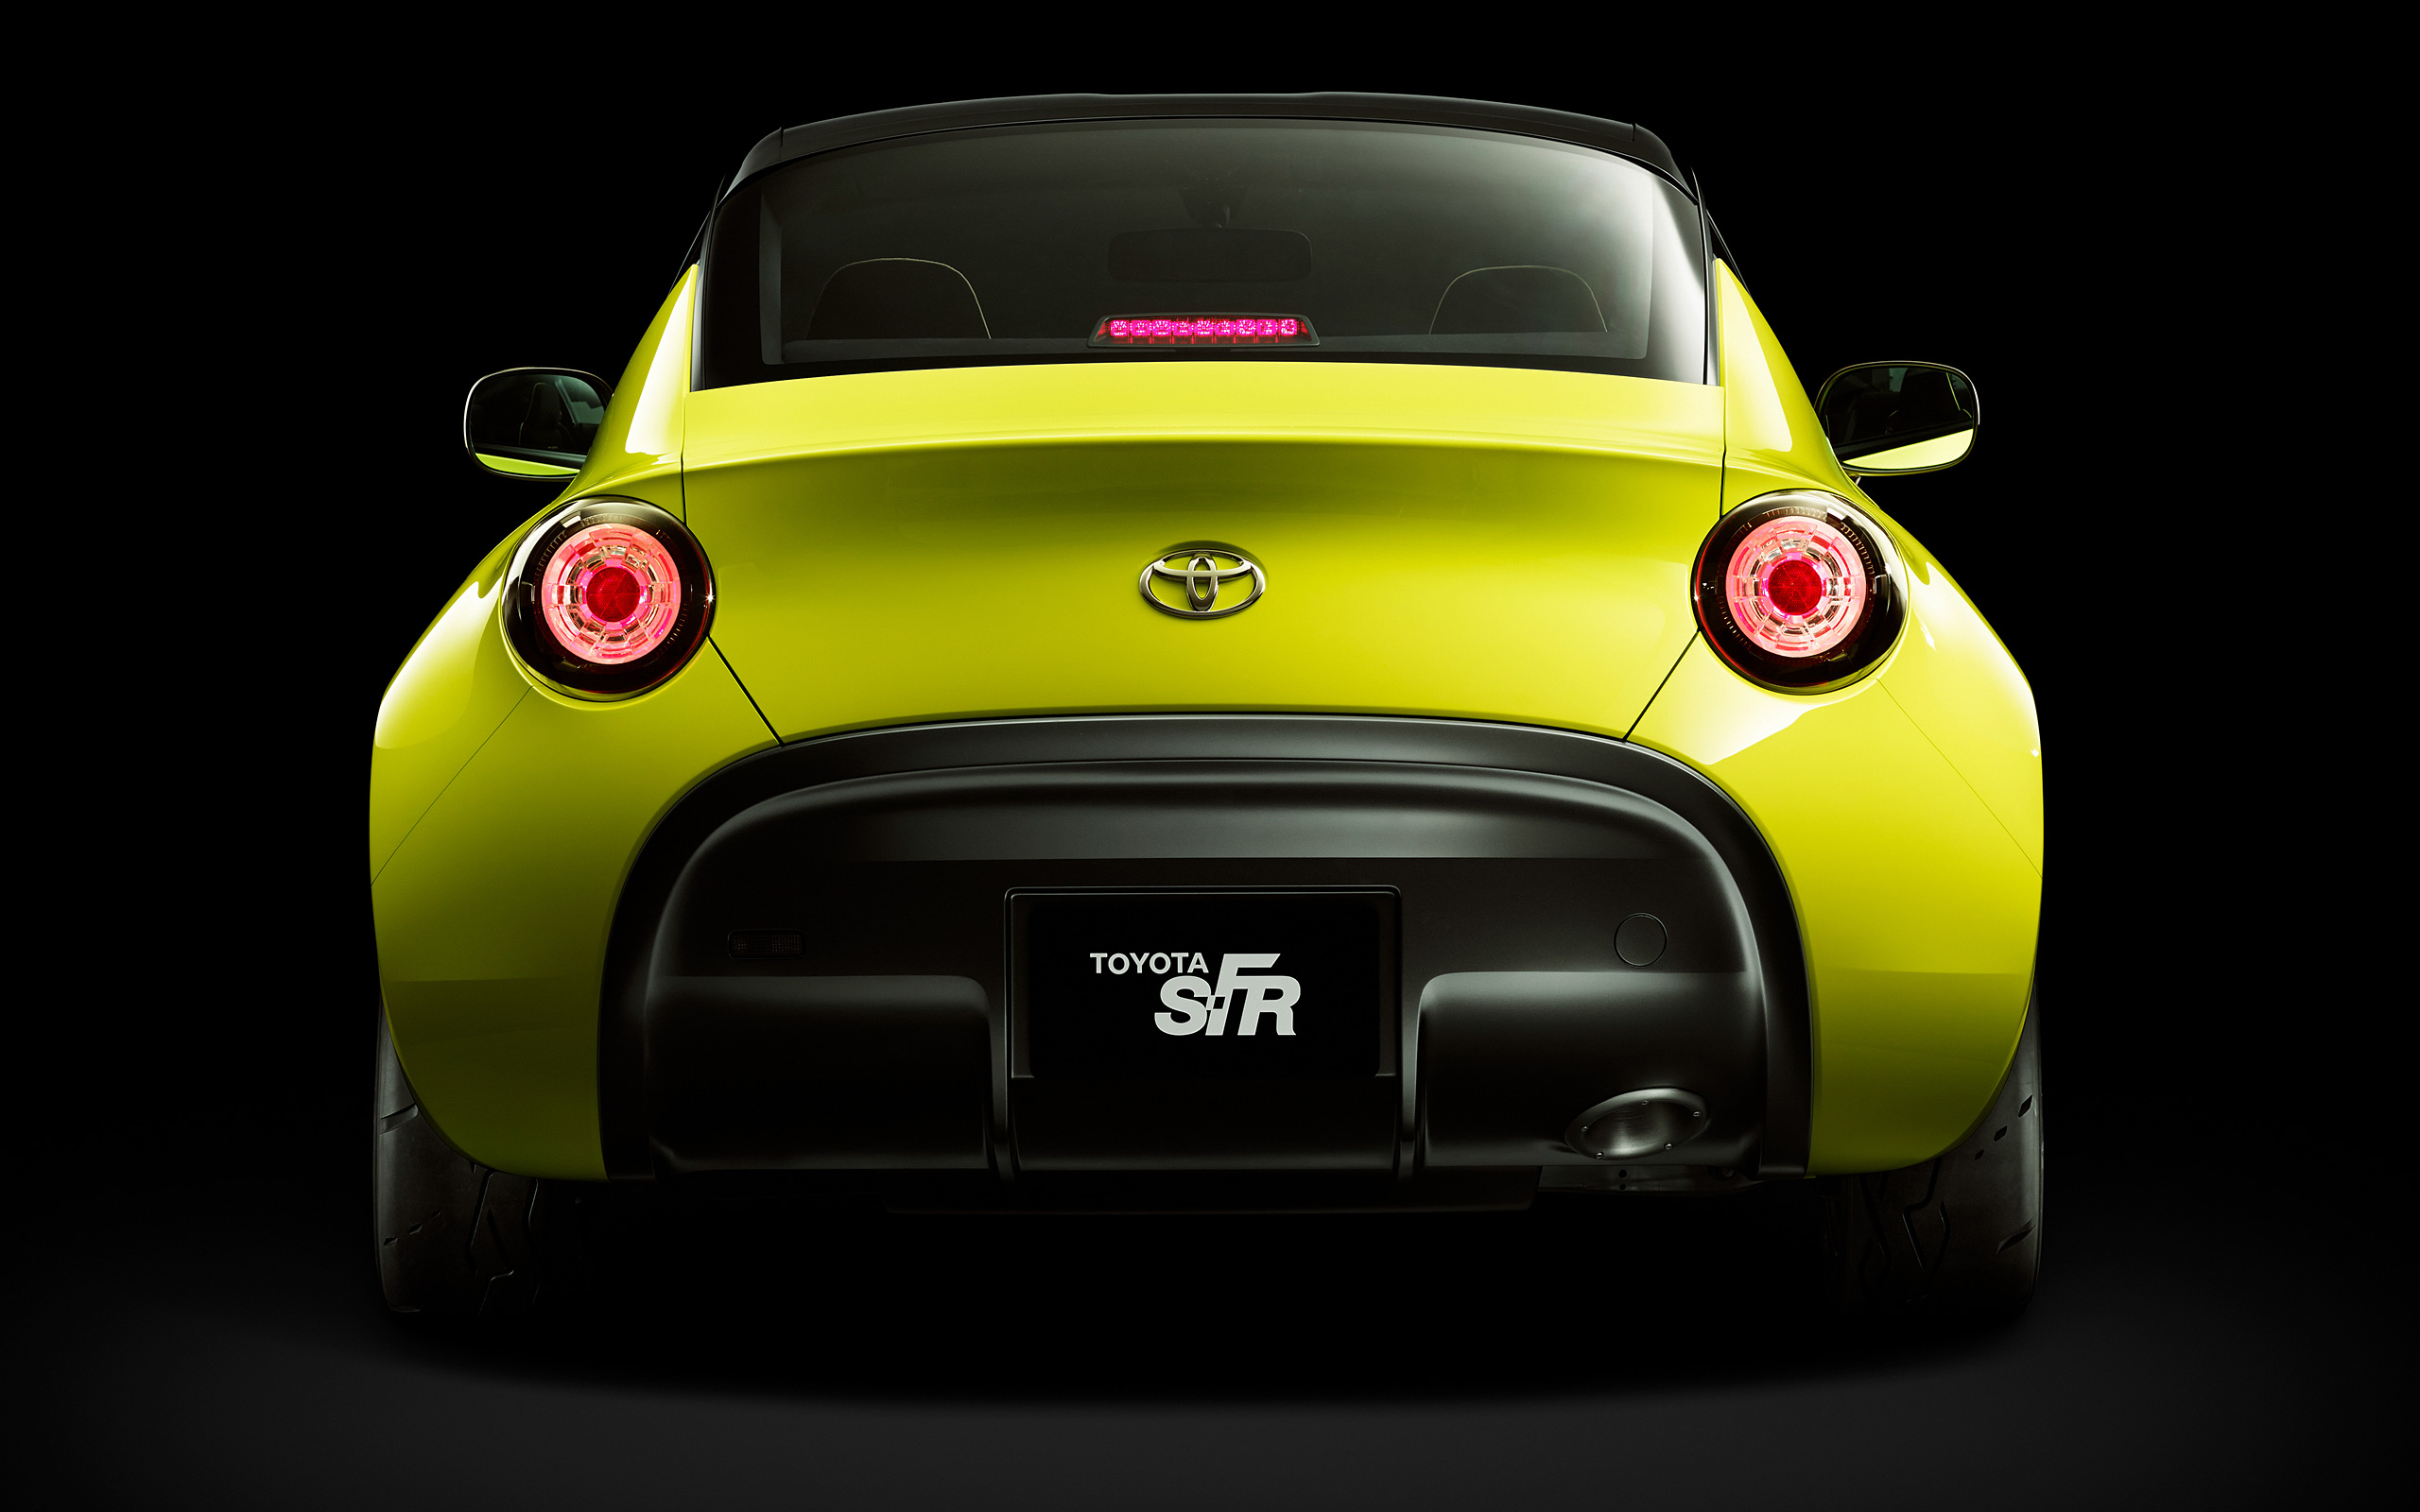  2015 Toyota S-FR Concept Wallpaper.